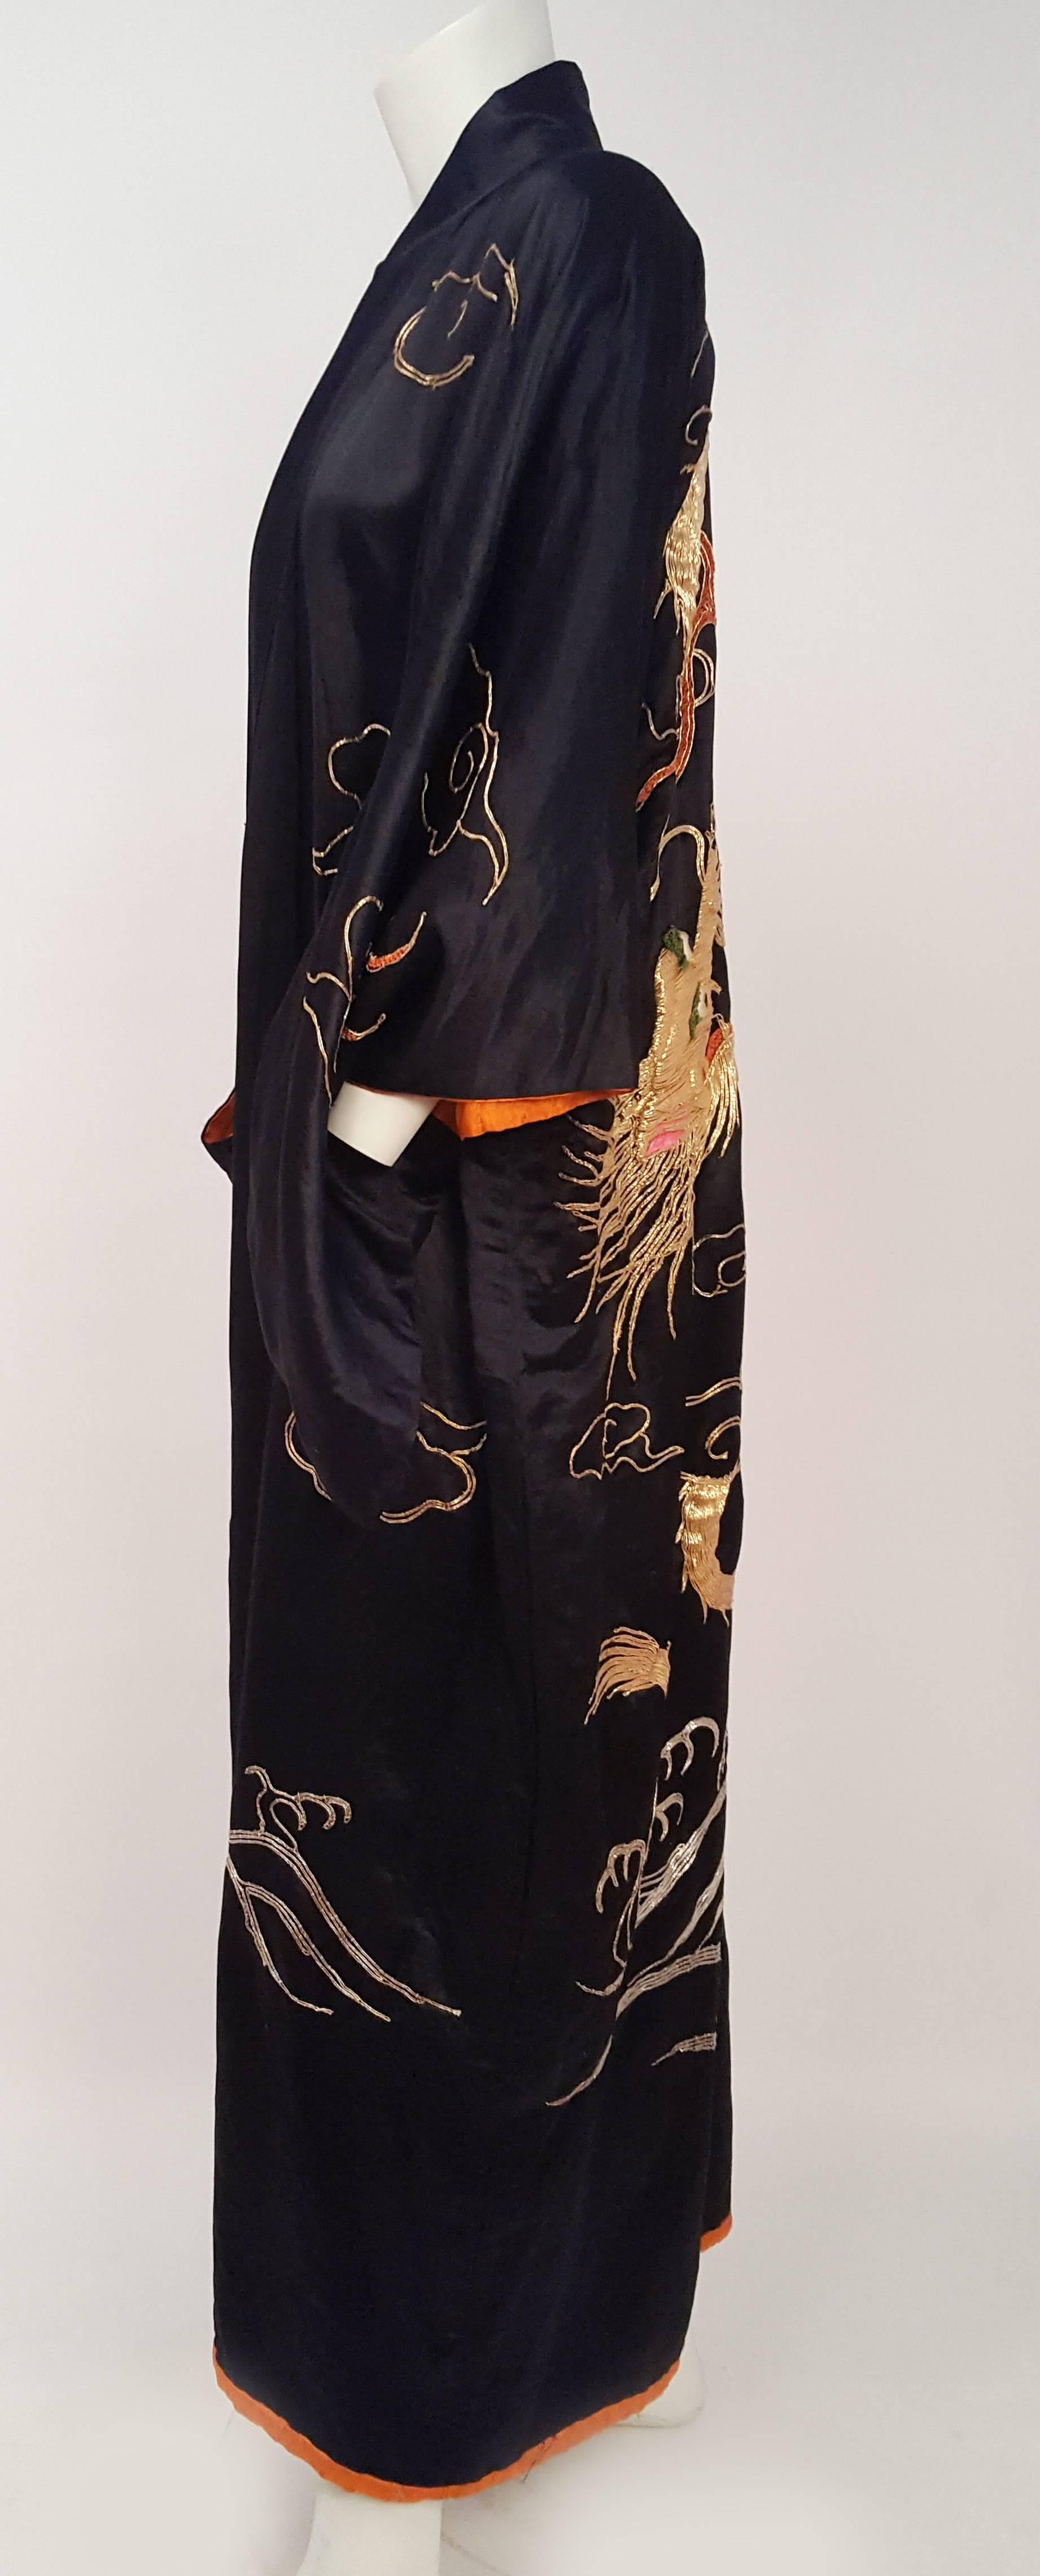 Japanese Kimono w/ Golden Dragon Embroidery. Beautiful bright orange lining. Three dimensional raised stuffed metallic dragon embroidery on back, with cloud motifs. 